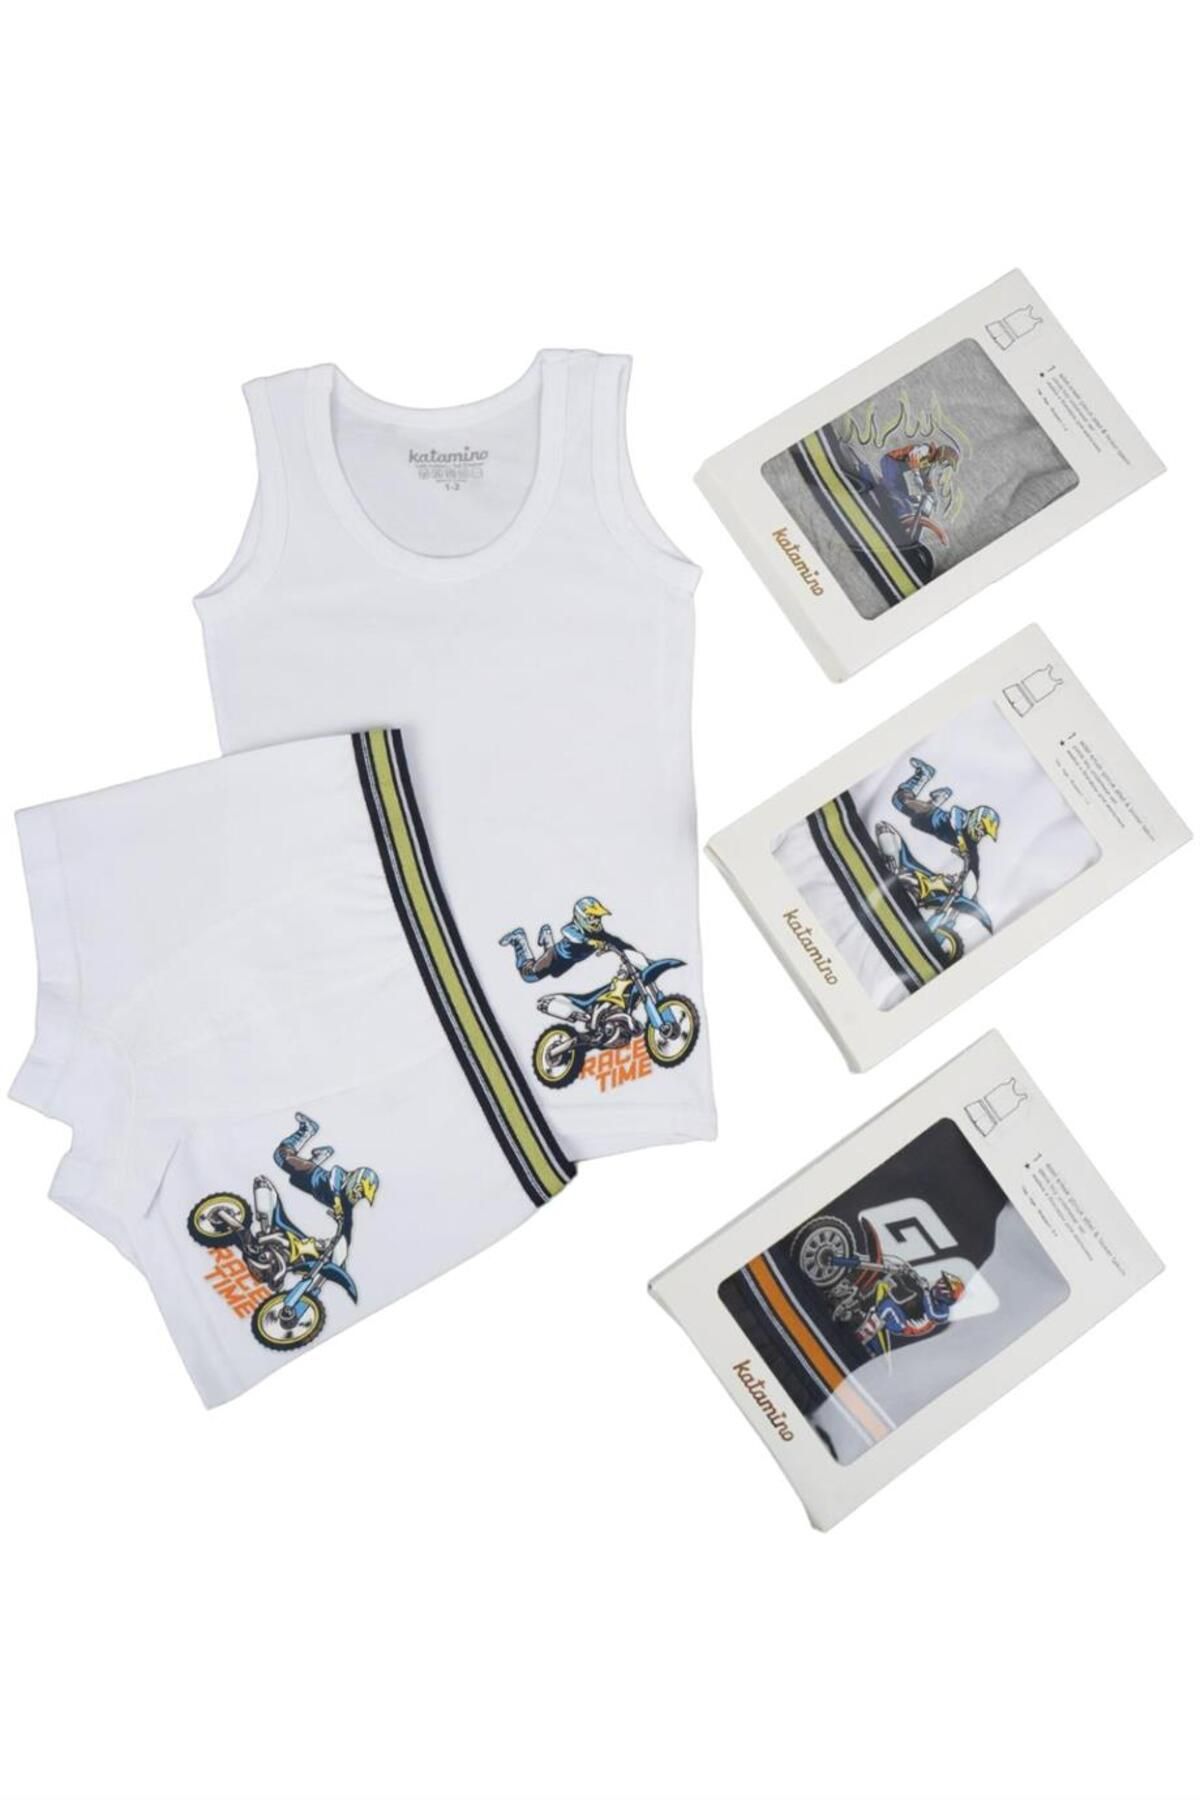 Katamino Erkek Çocuk Motorsikletl Atlet & Boxer Set 128331 Beyaz